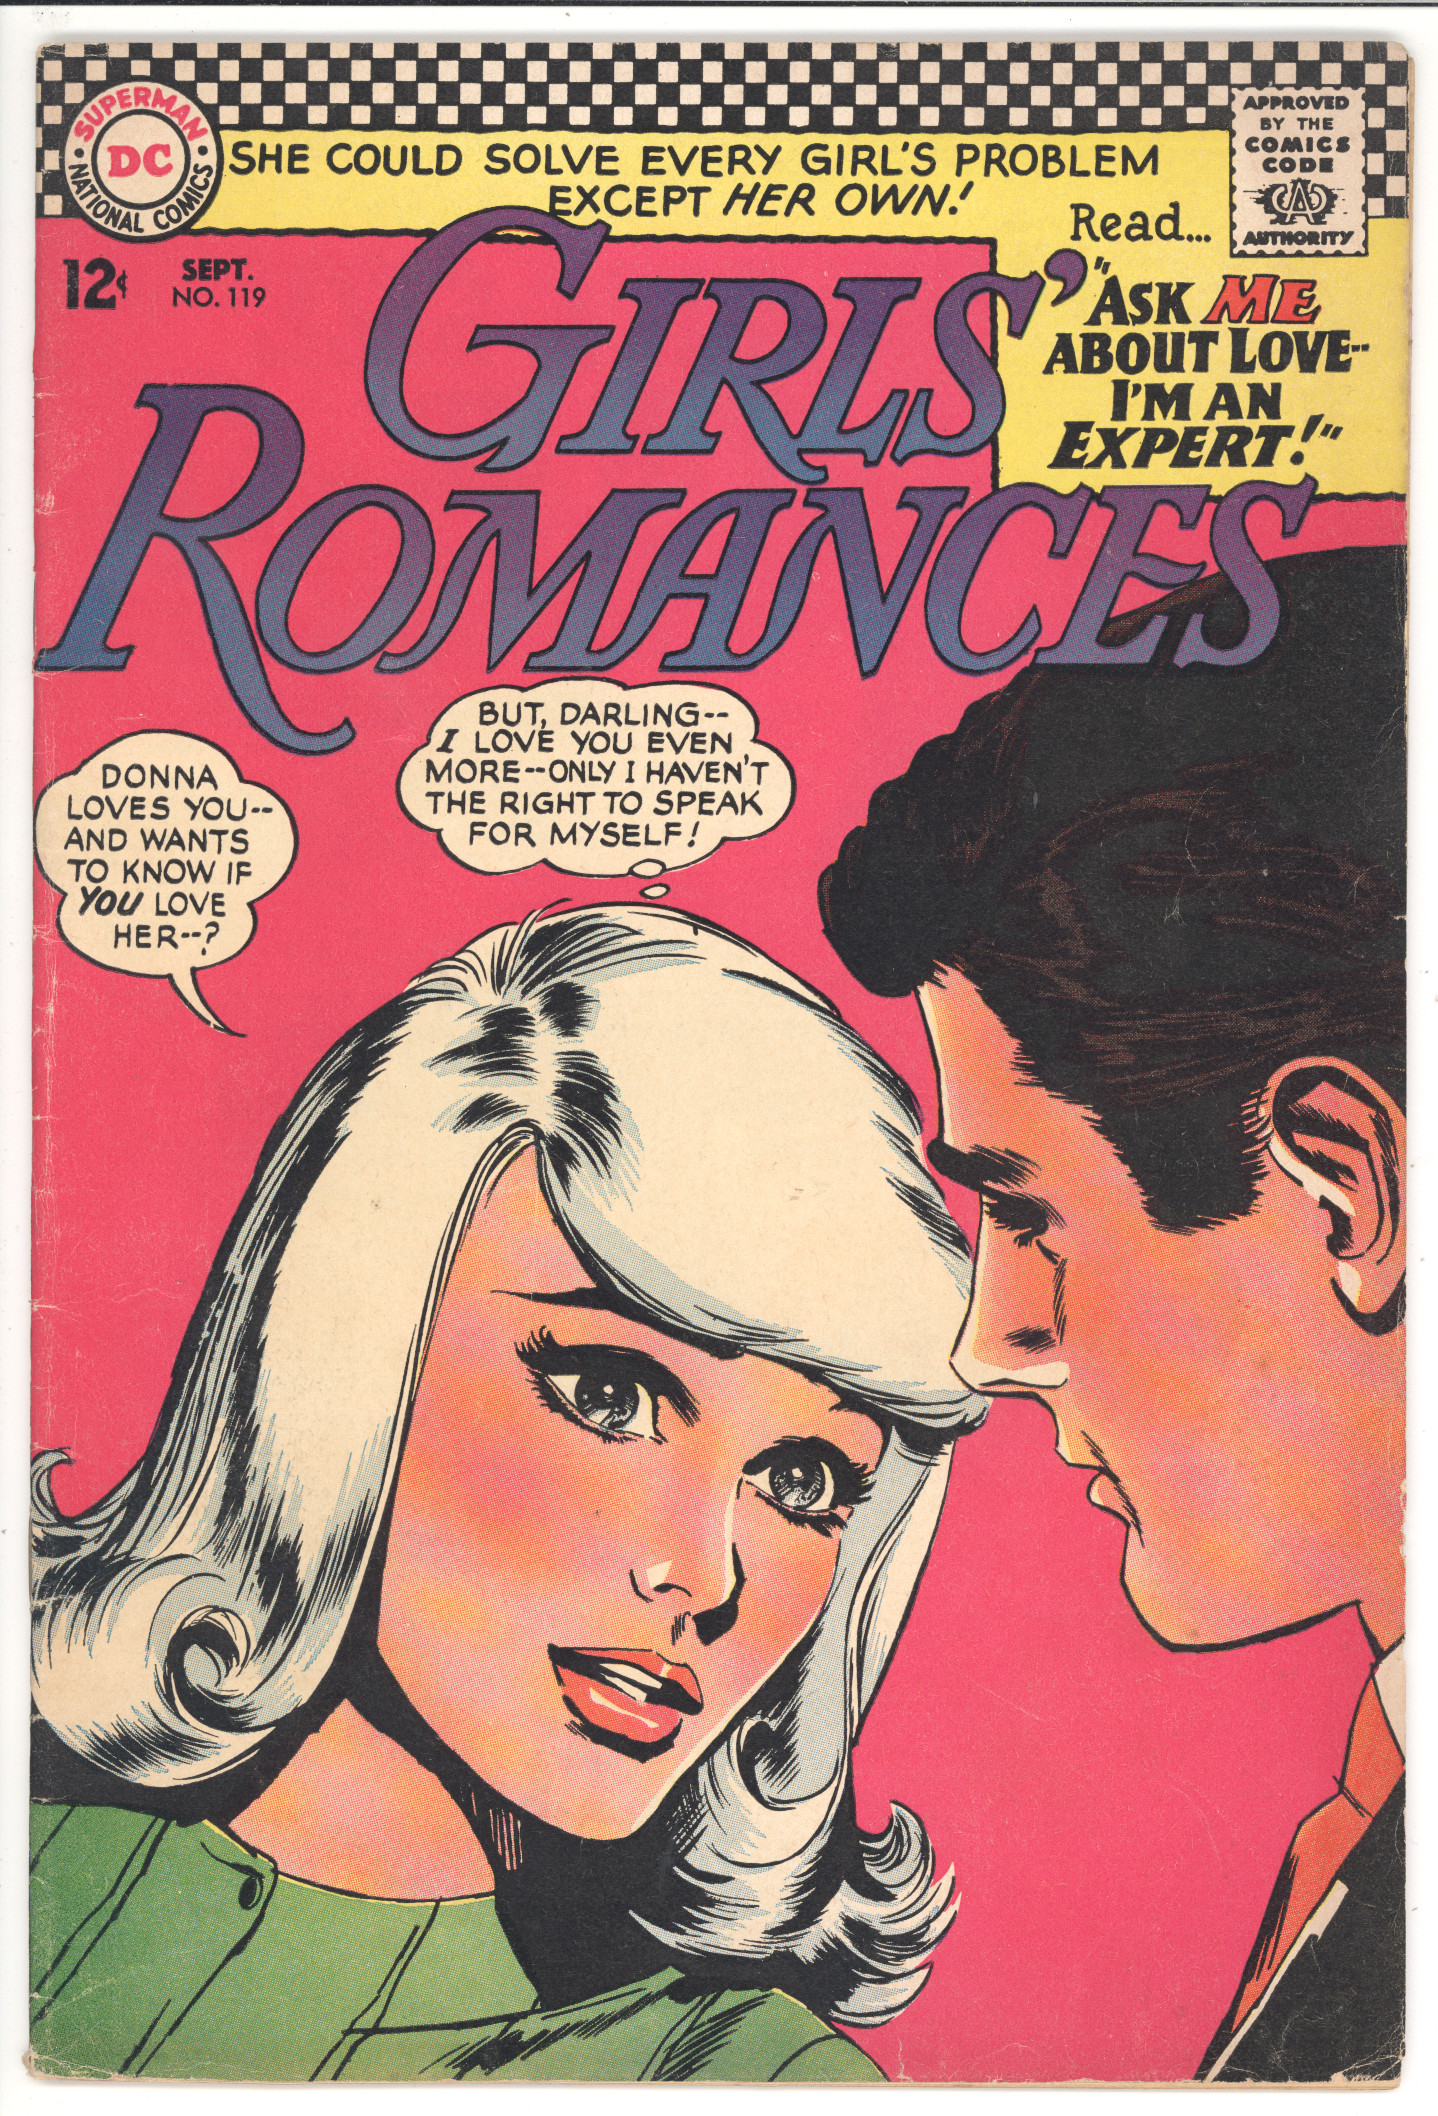 Girls' Romances #119 front